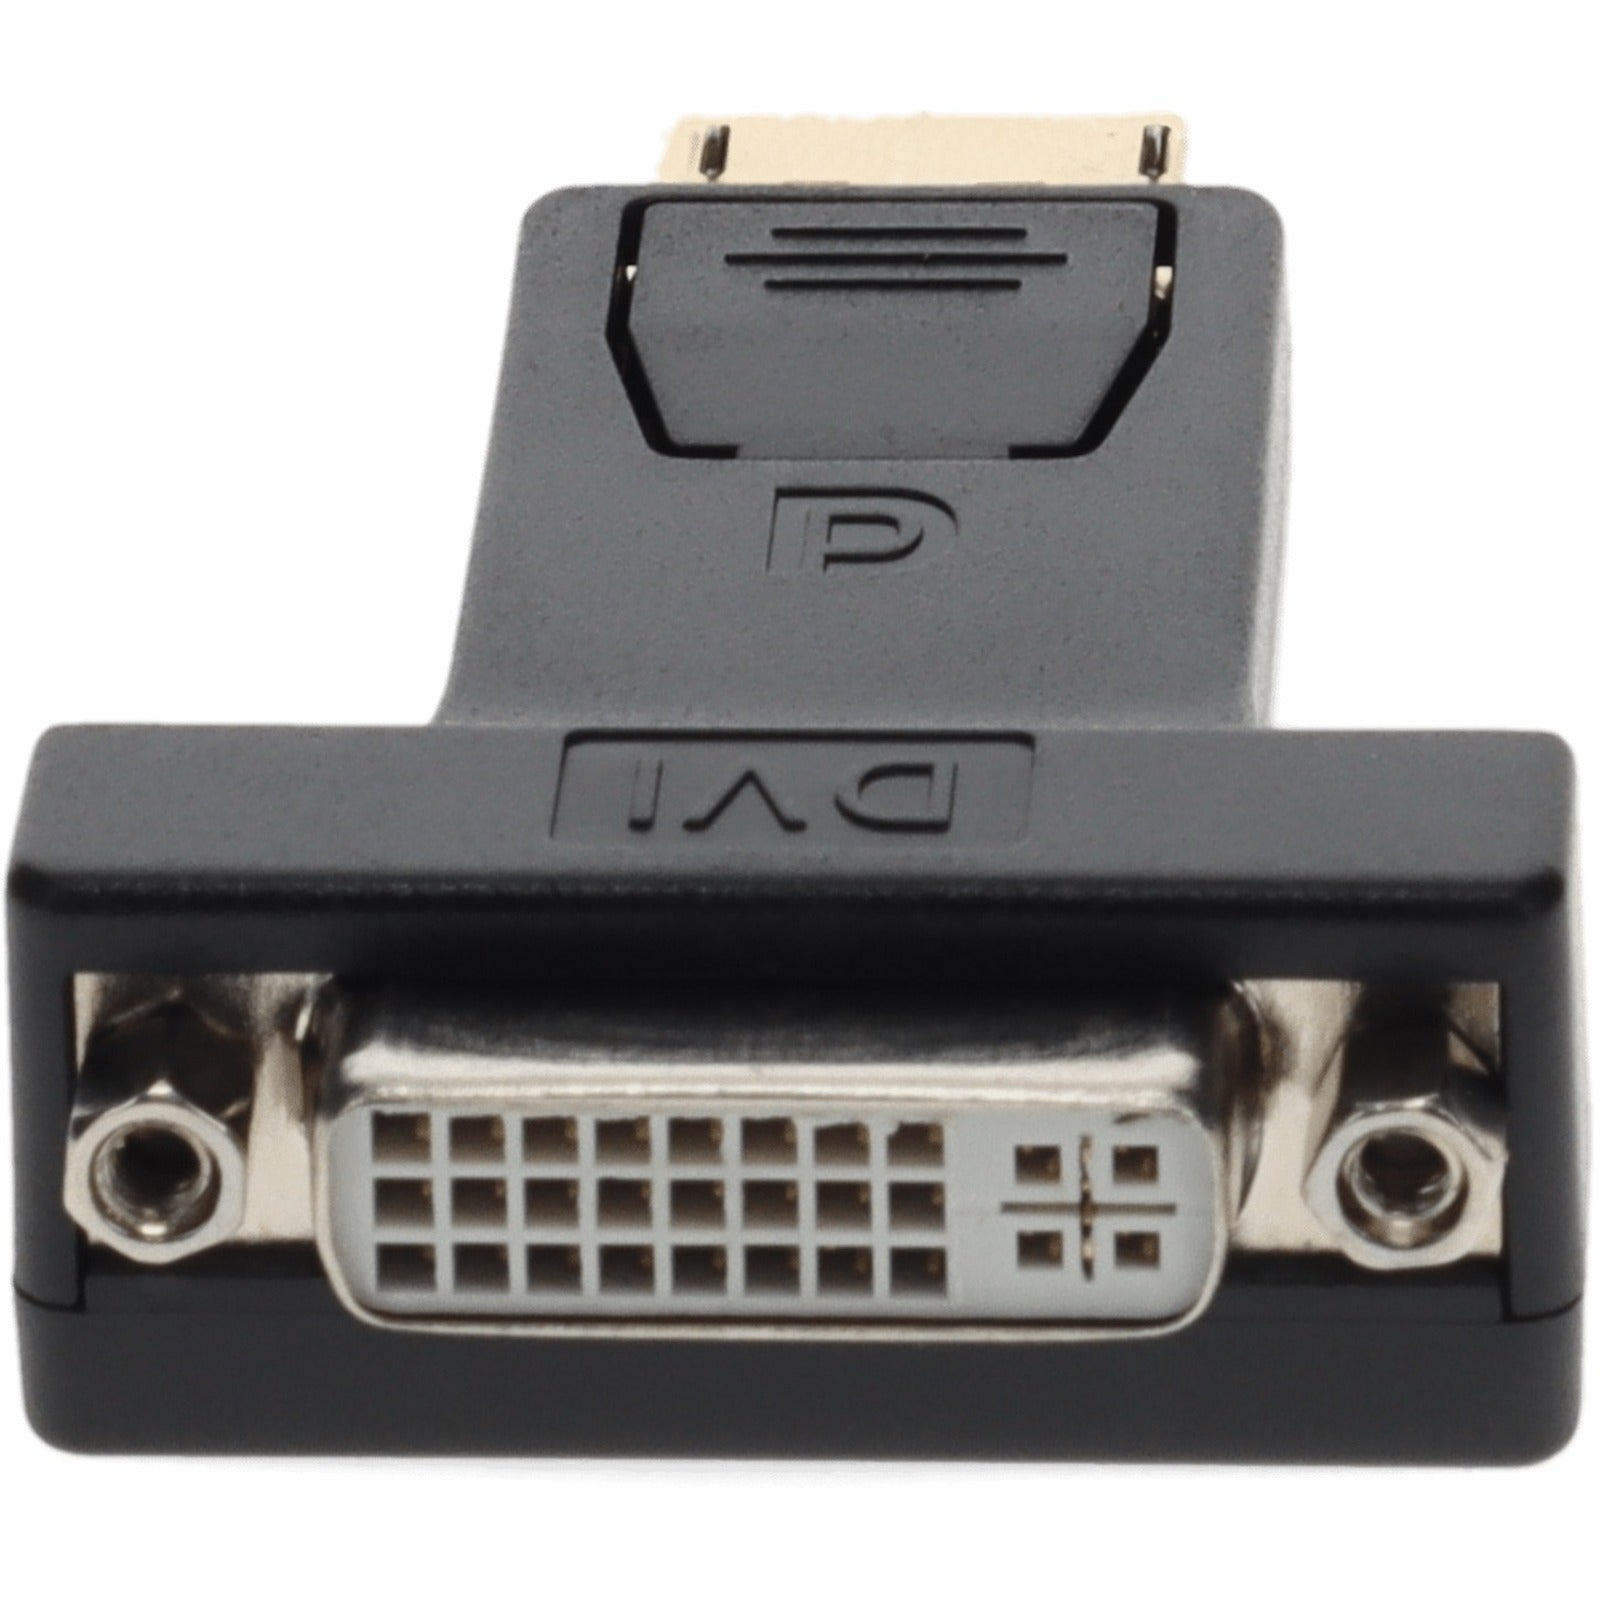 AddOn DISPORT2DVIADPT-5PK Bulk 5 Pack Displayport to DVI Adapter Converter - M/F, Video Adapter